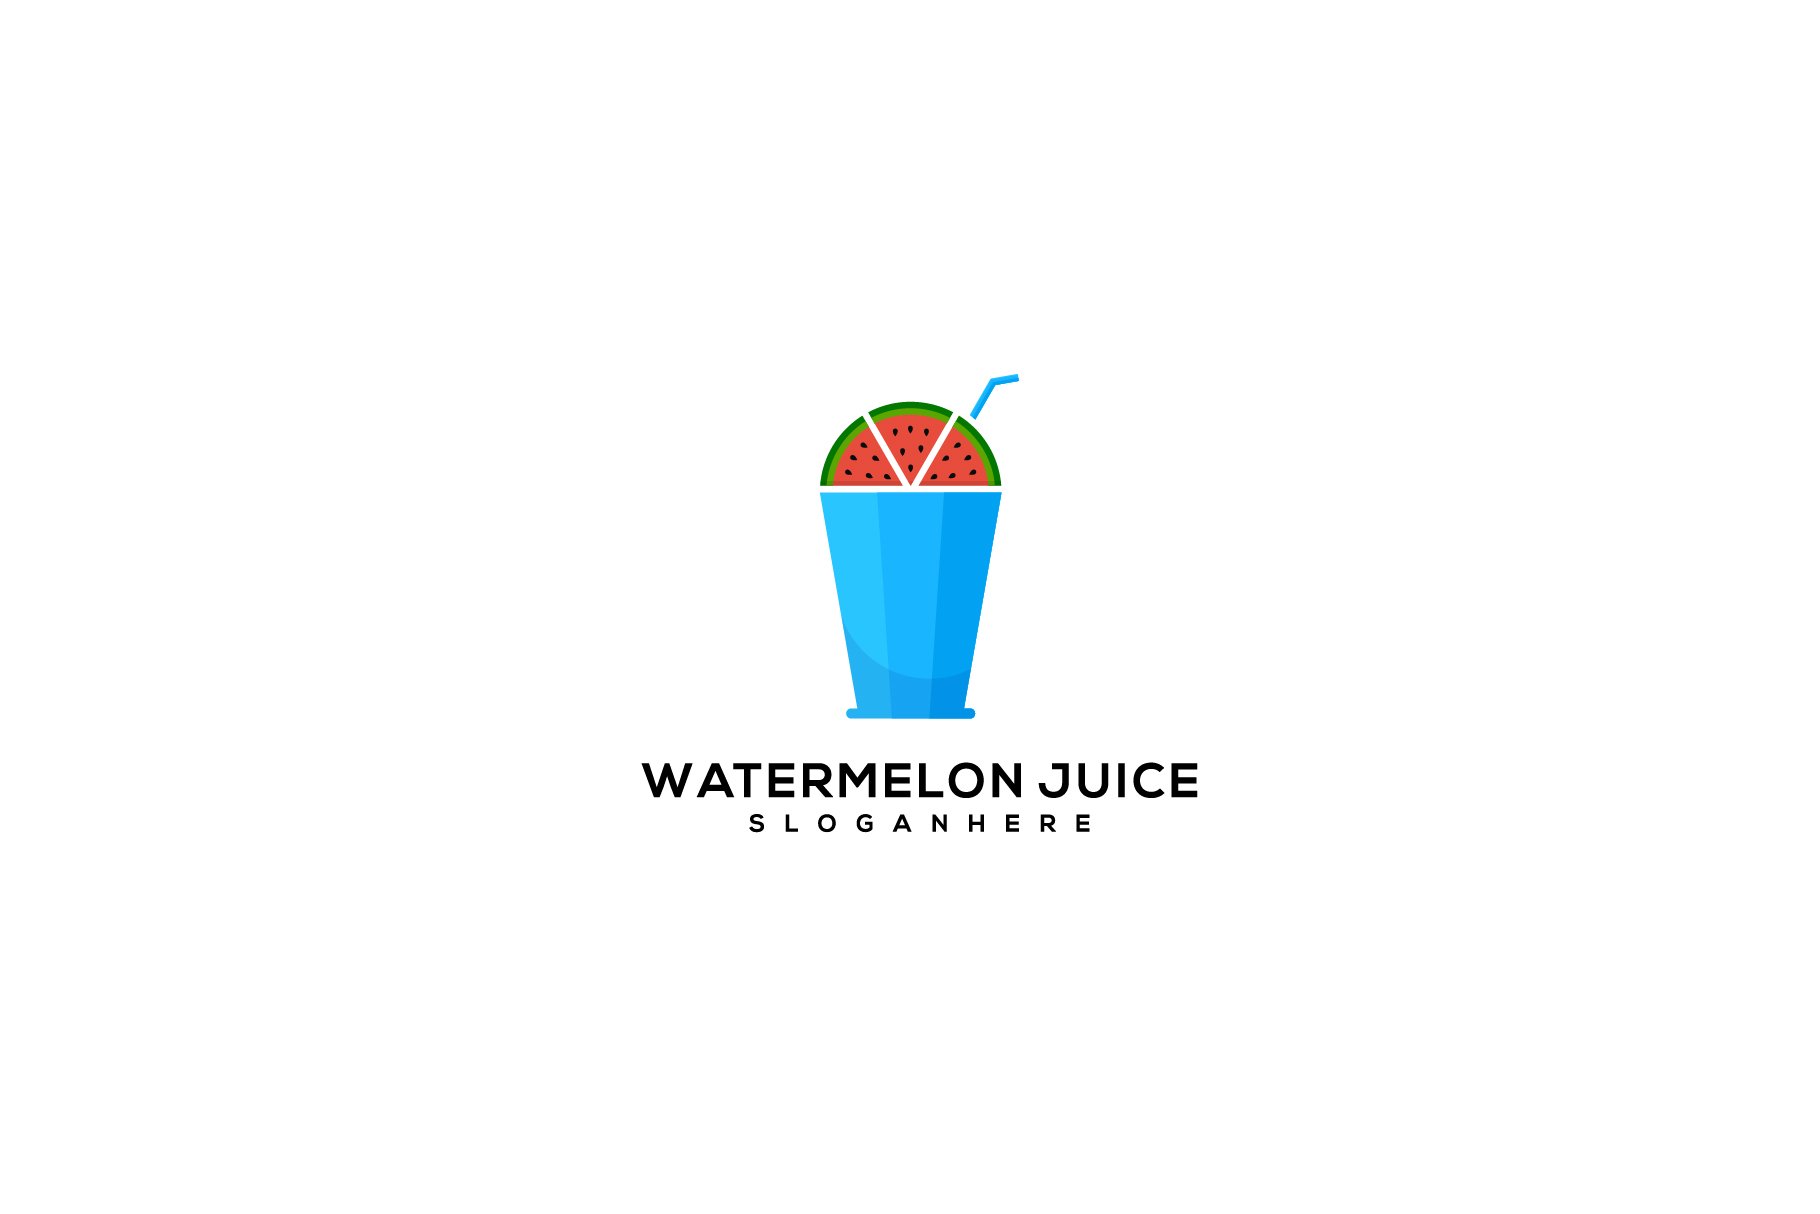 Watermelon juice logo design vector cover image.